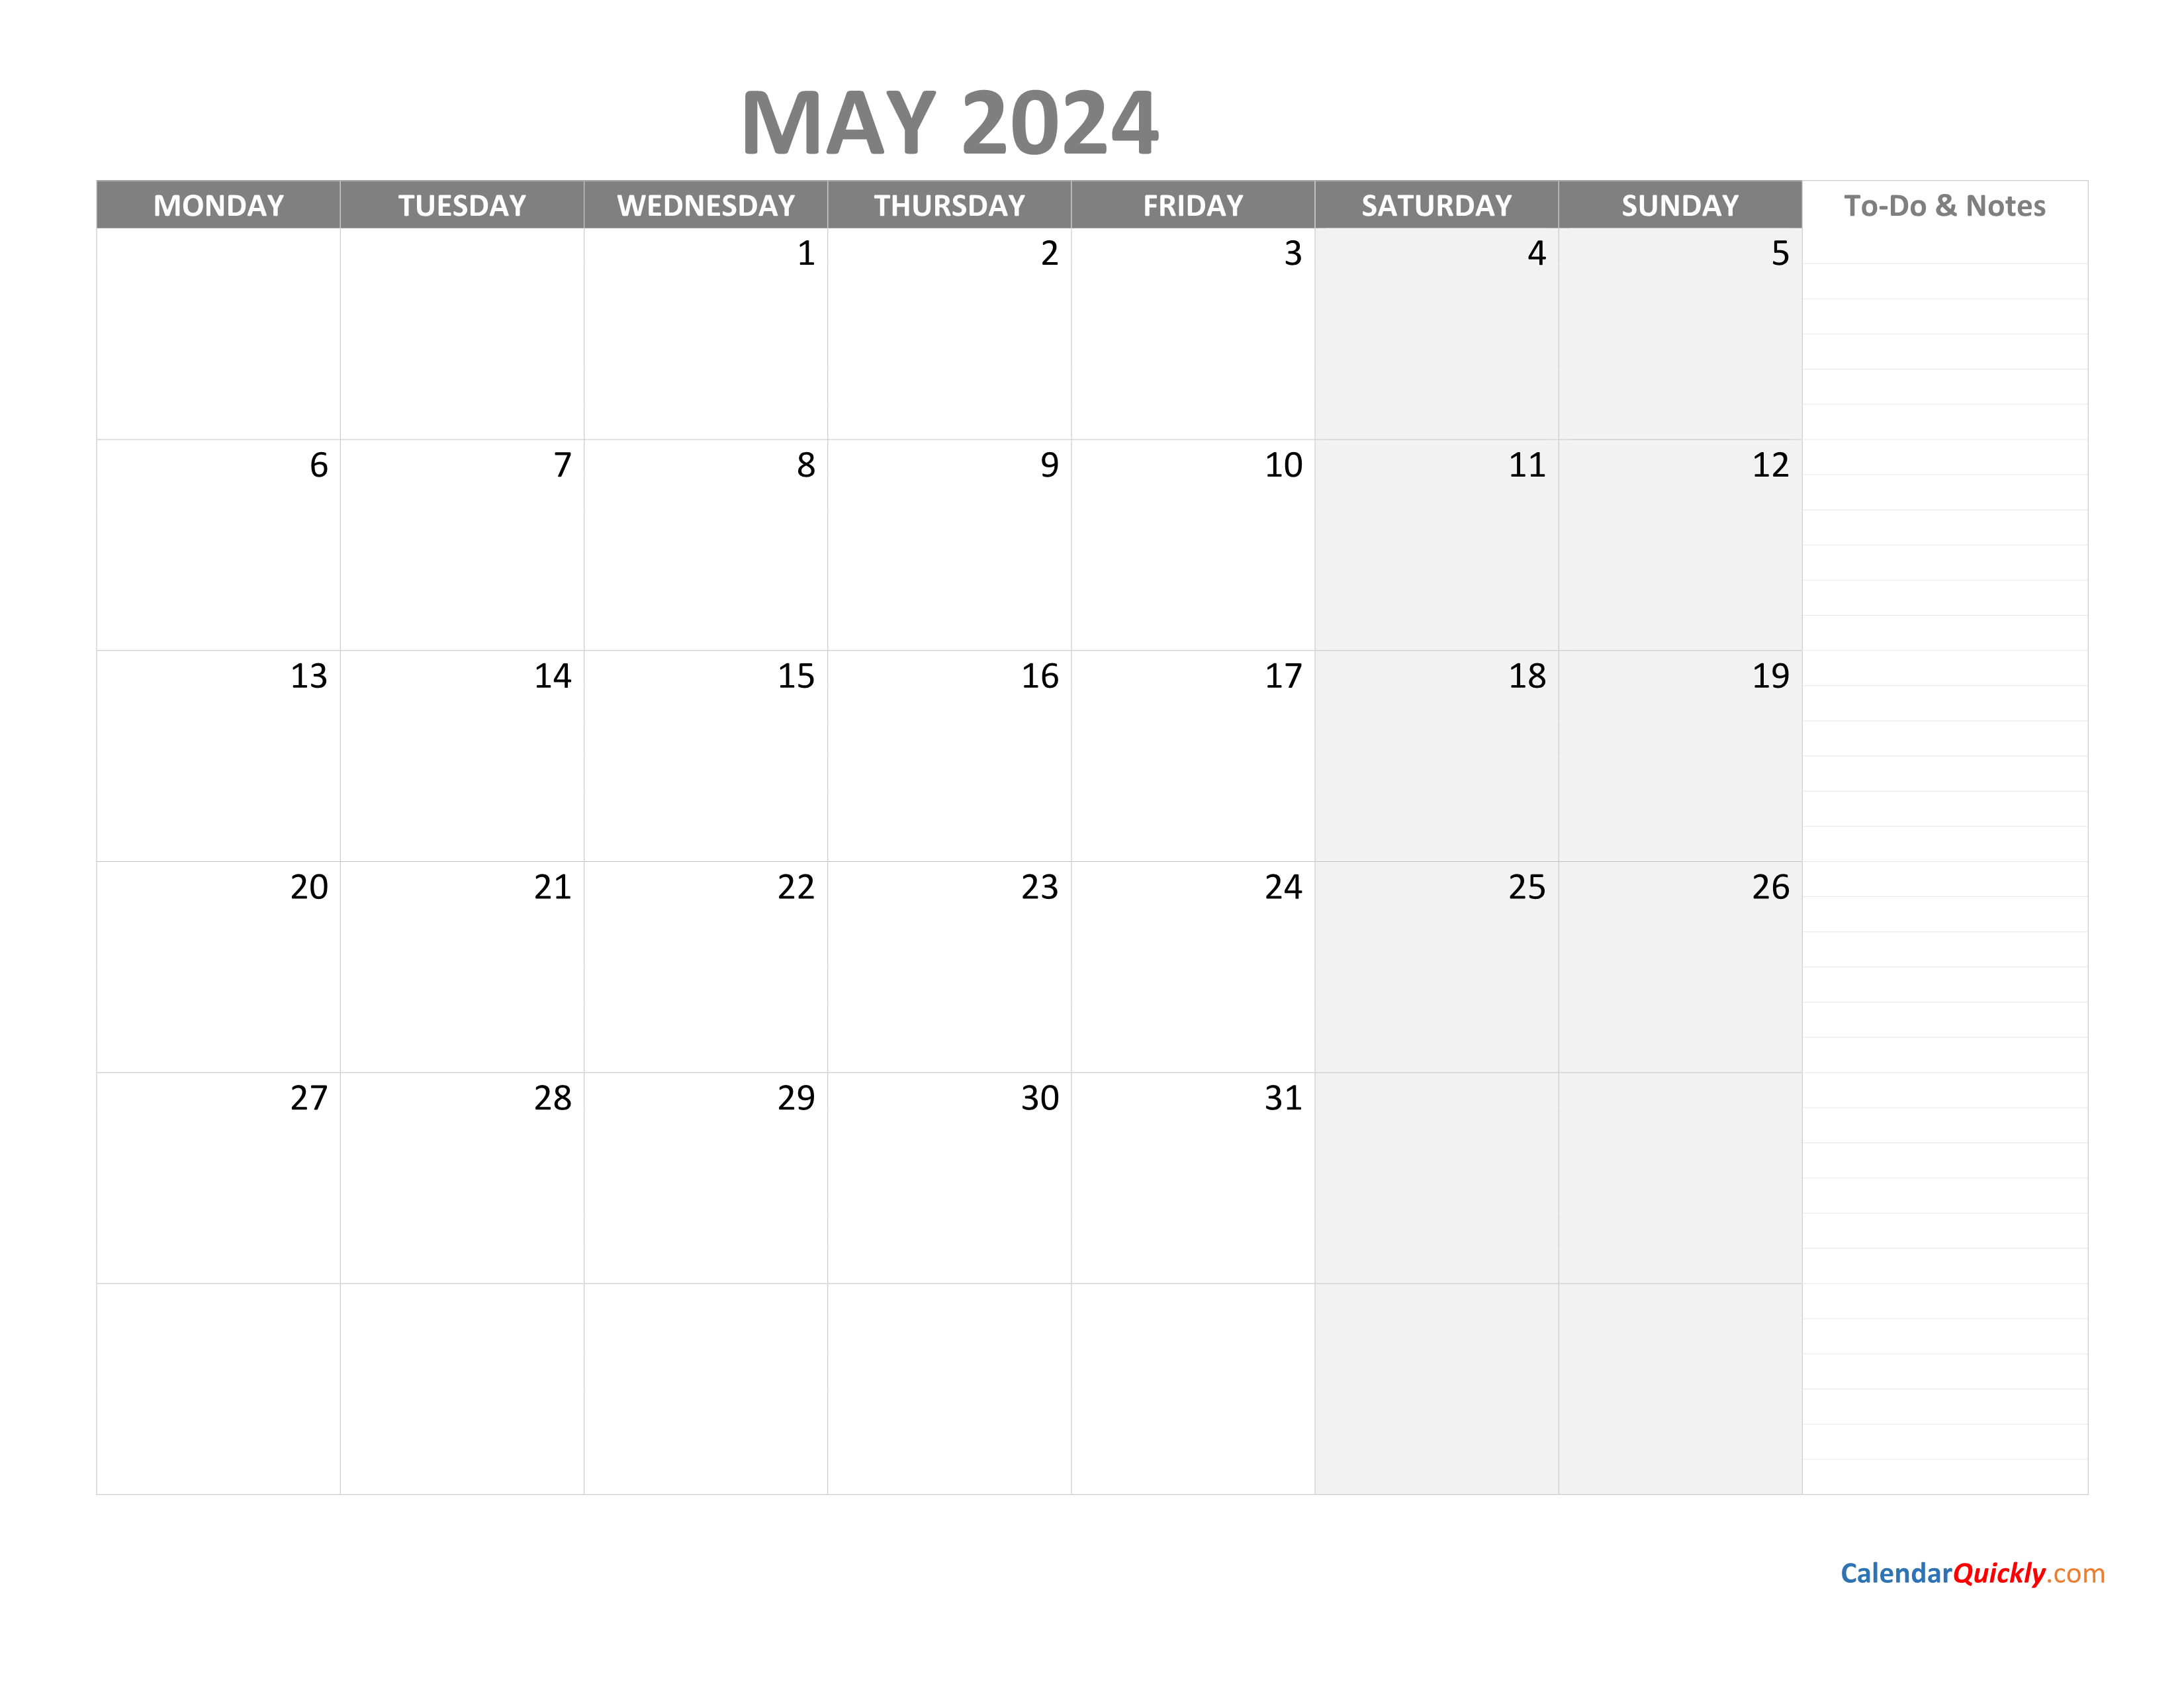 may-calendar-2024-vertical-calendar-quickly-gambaran